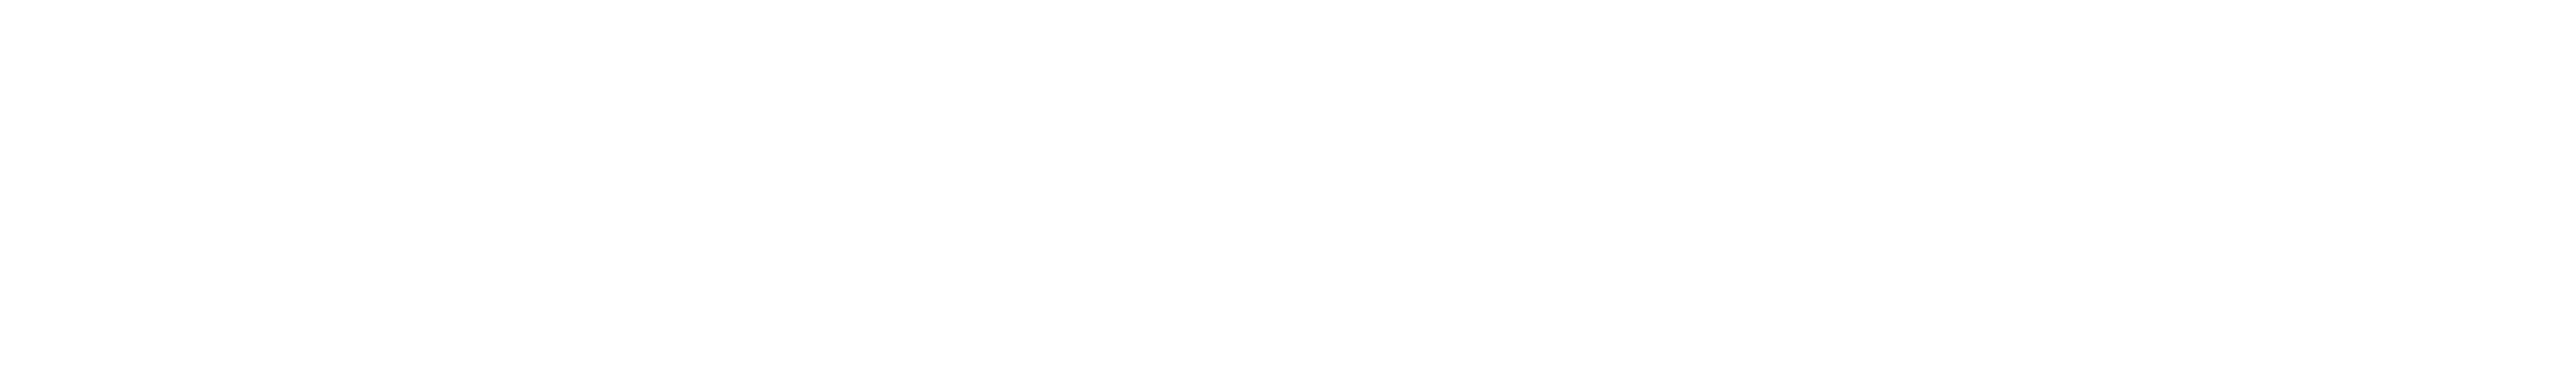 MetaExchange Brand